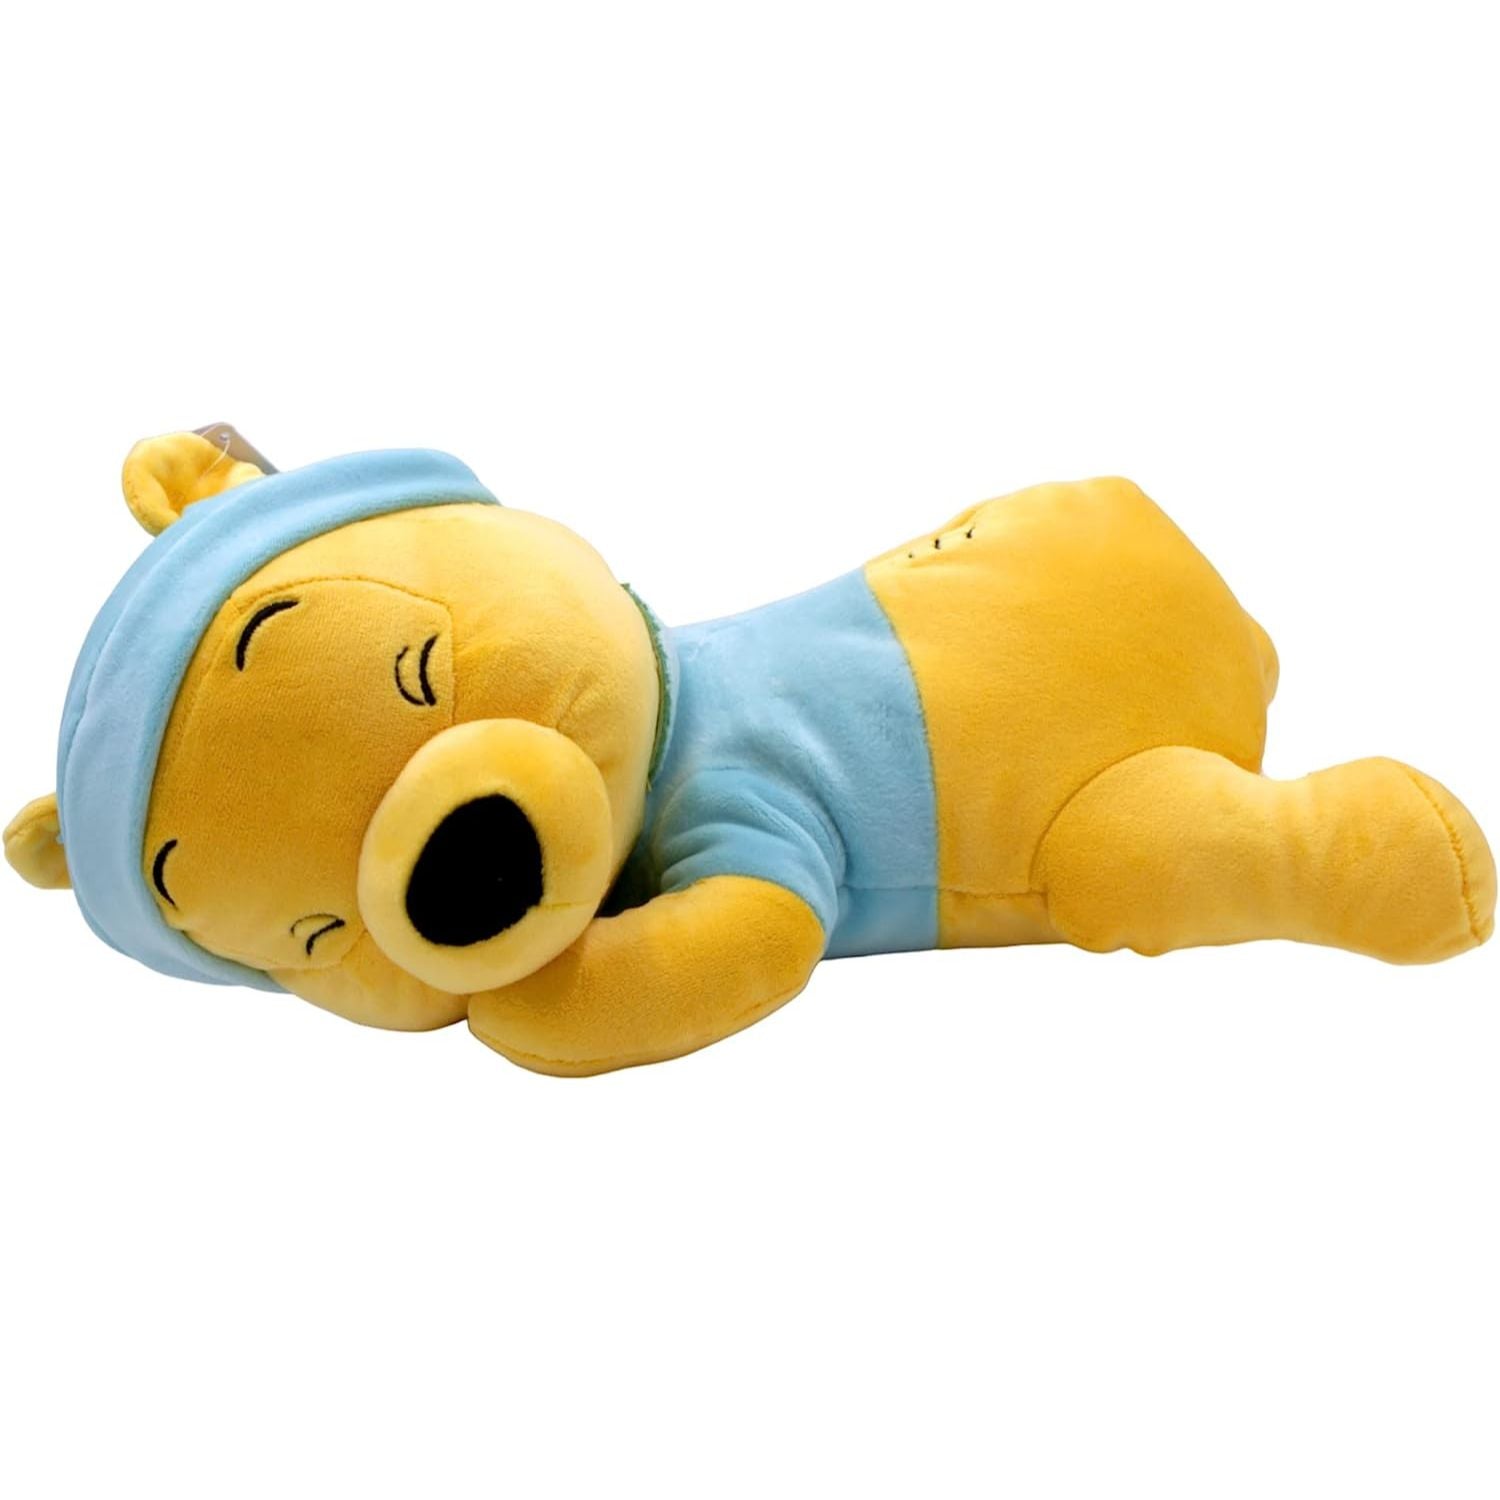 Disney Baby - Sleeping Babies - Winnie with Sleeping Hat Plush Toy - Heretoserveyou